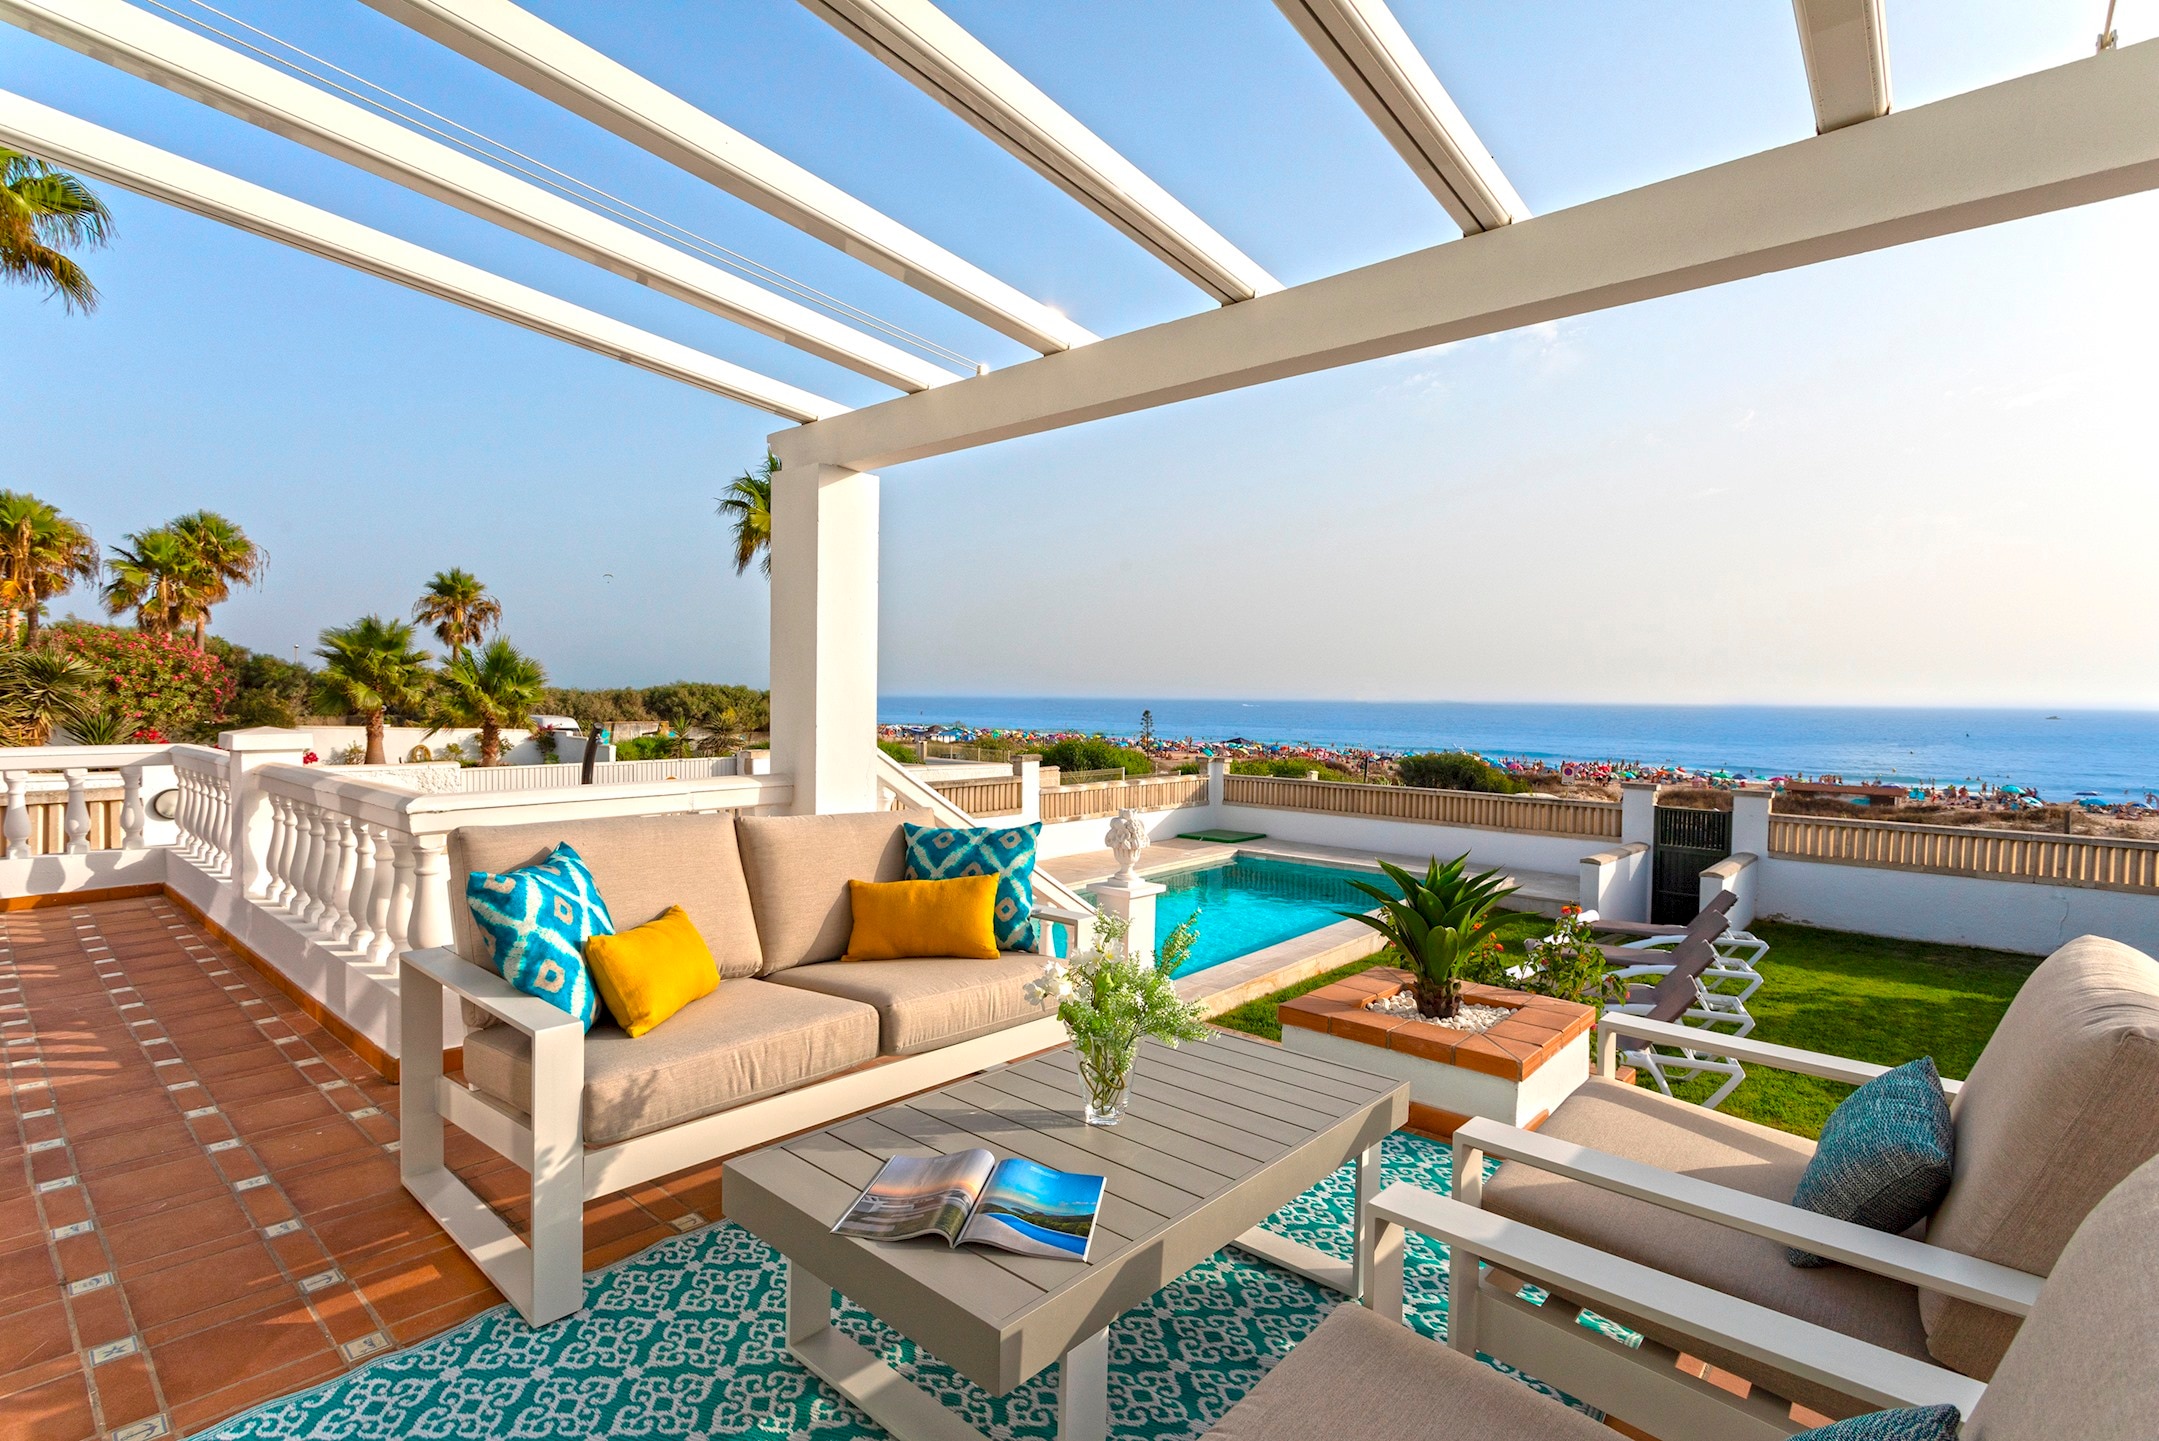 Property Image 1 - Big house with pool on the beach. La Barrosa